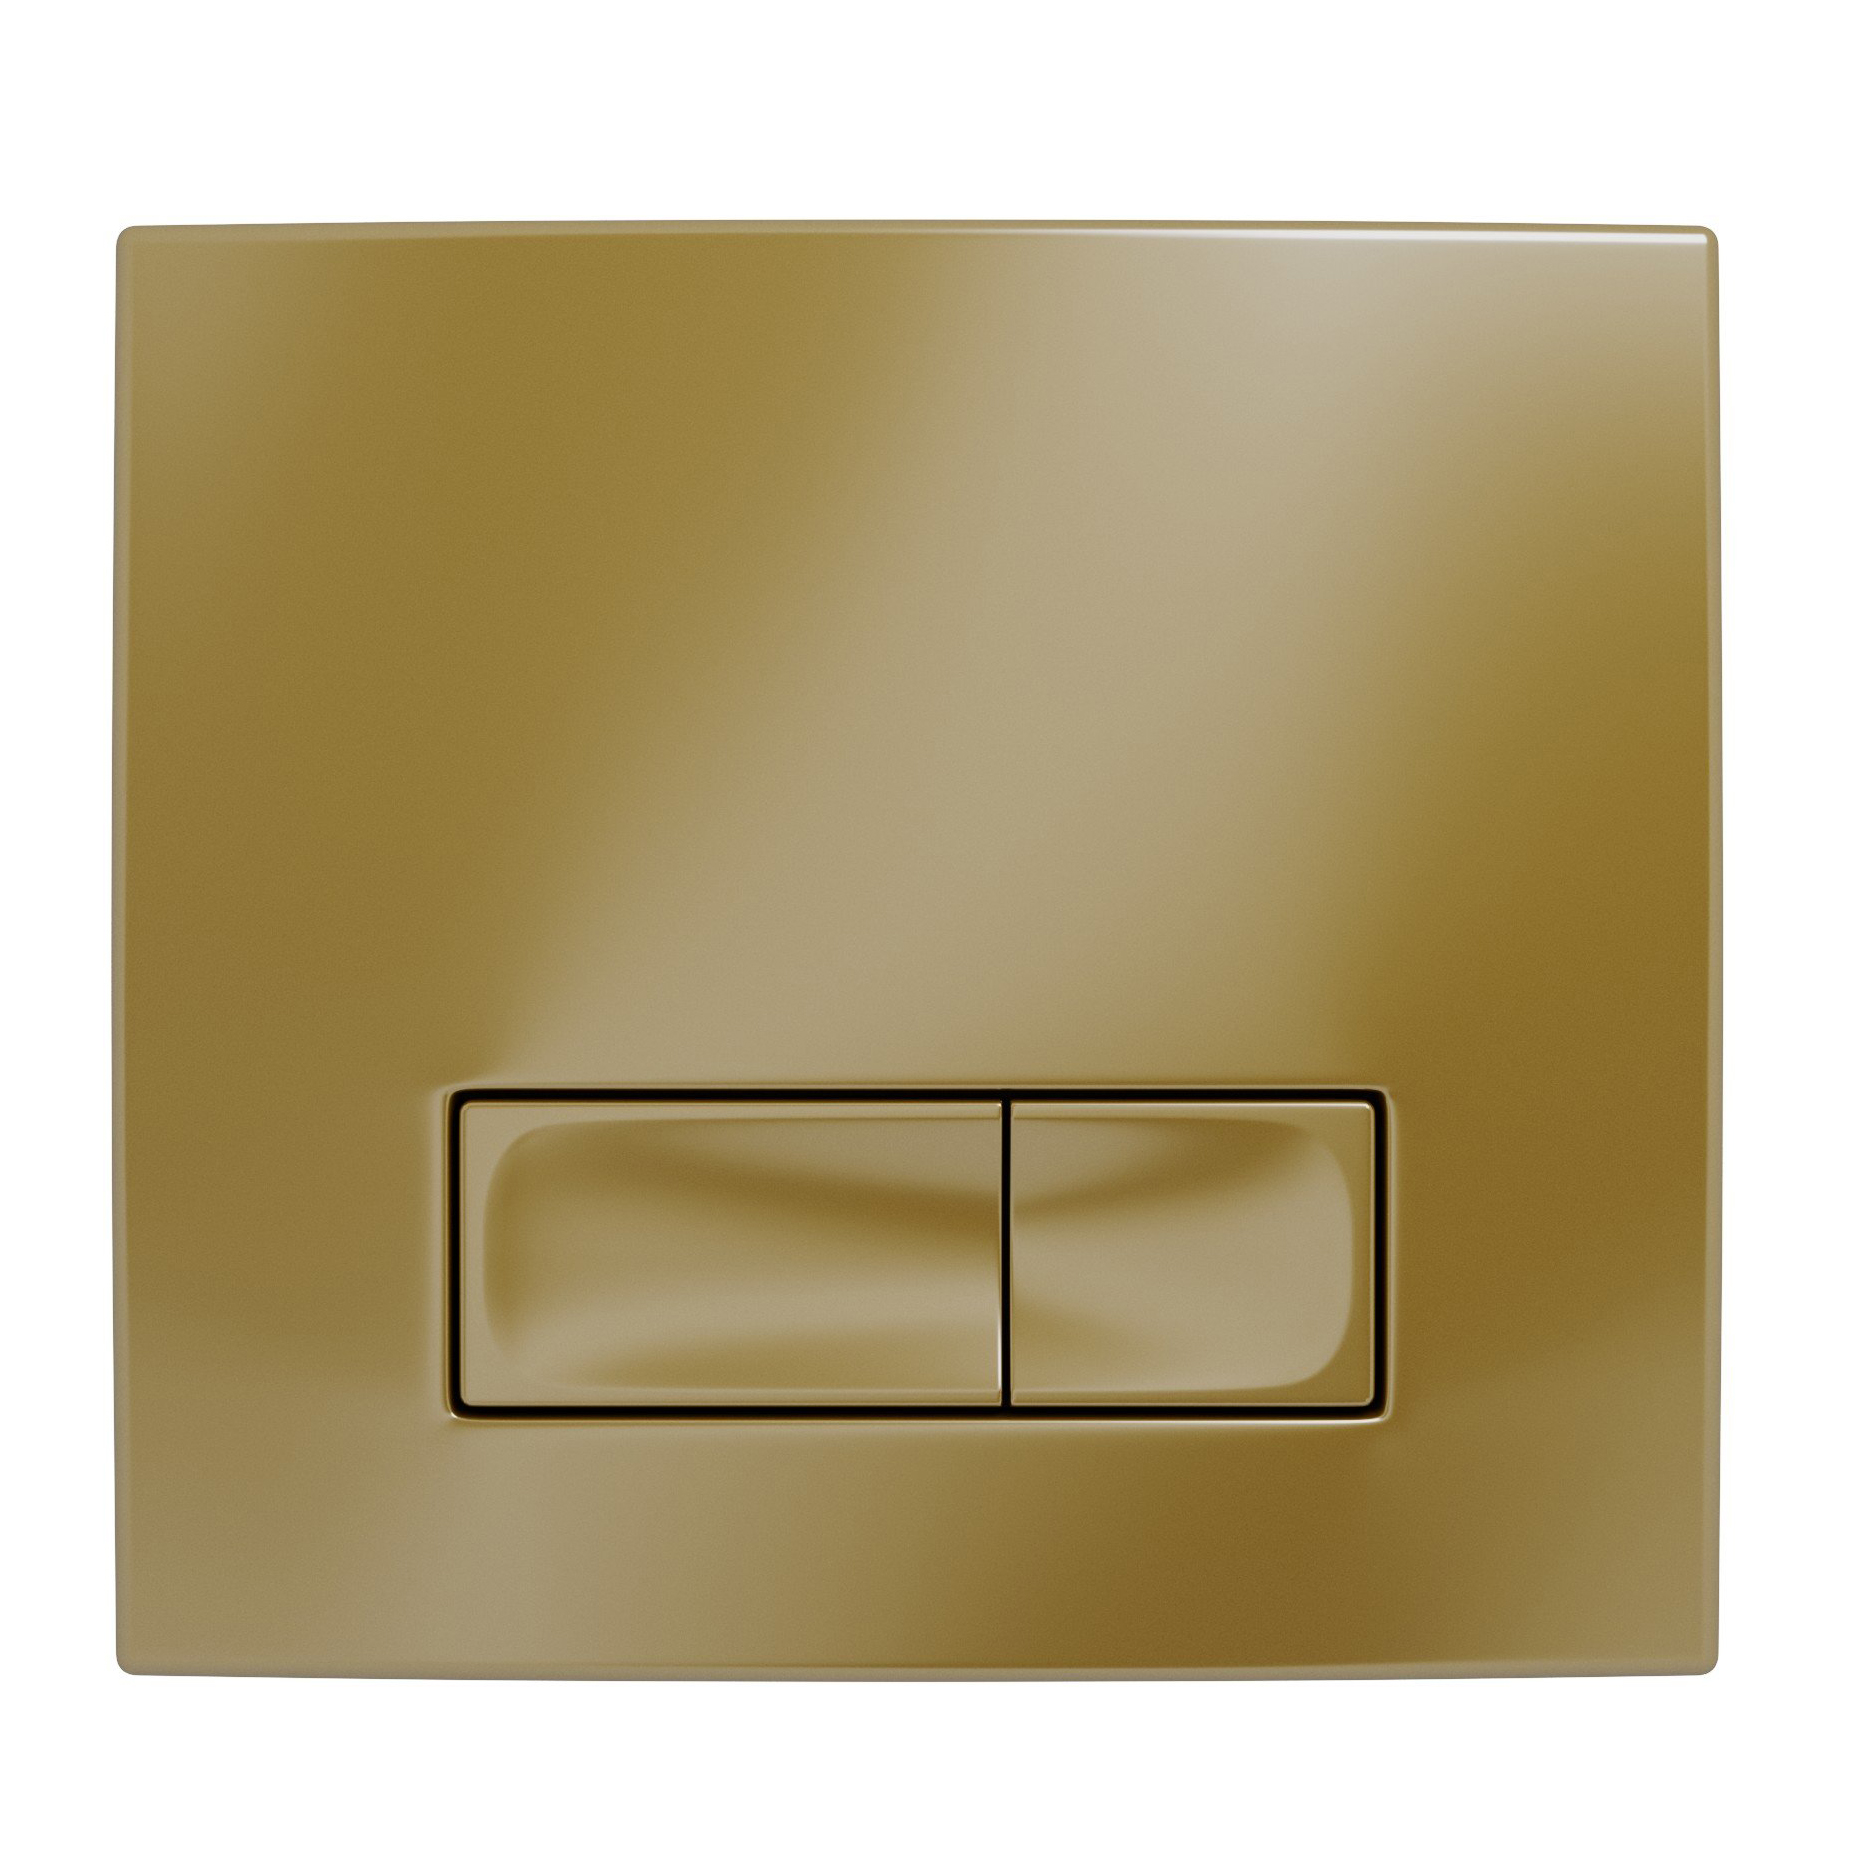 Кнопка для инсталляции Grossman Classic 800.Т1.04.310.310 золото кнопка смыва grossman style 700 k31 05 30m 30m золото глянцевая